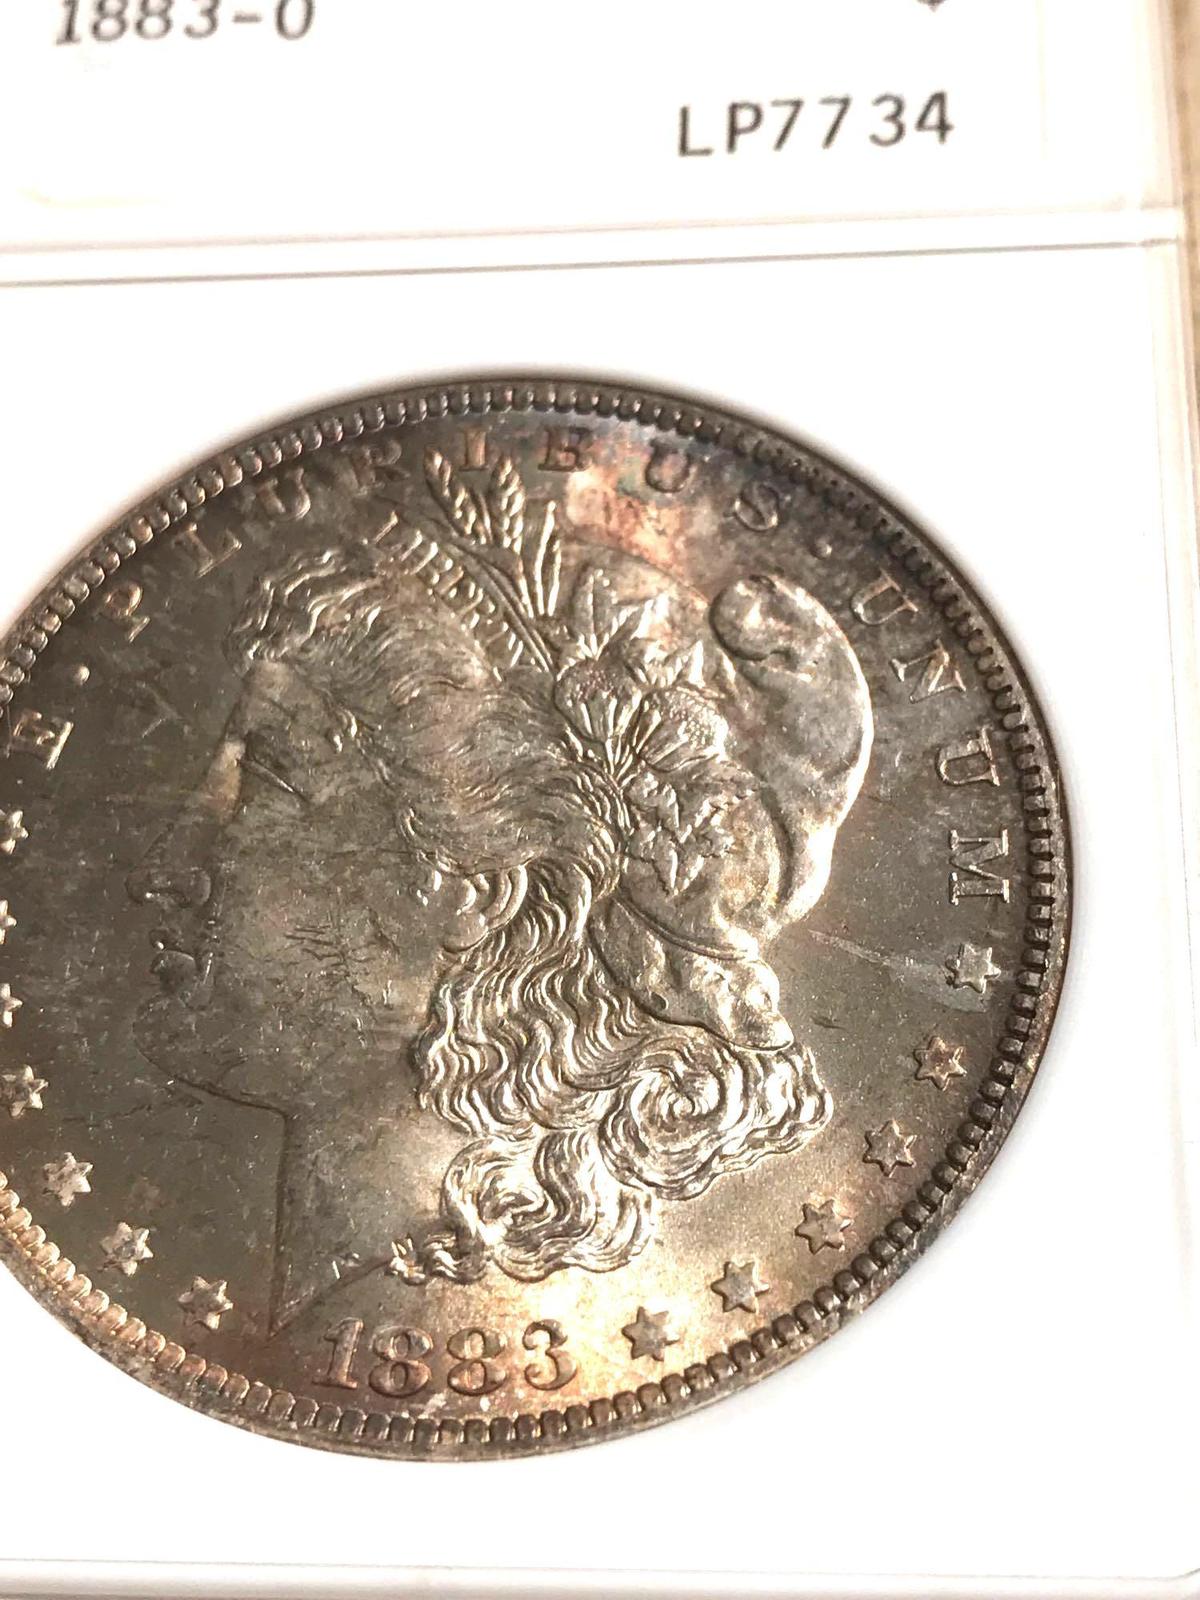 1880 -0 Morgan silver dollar